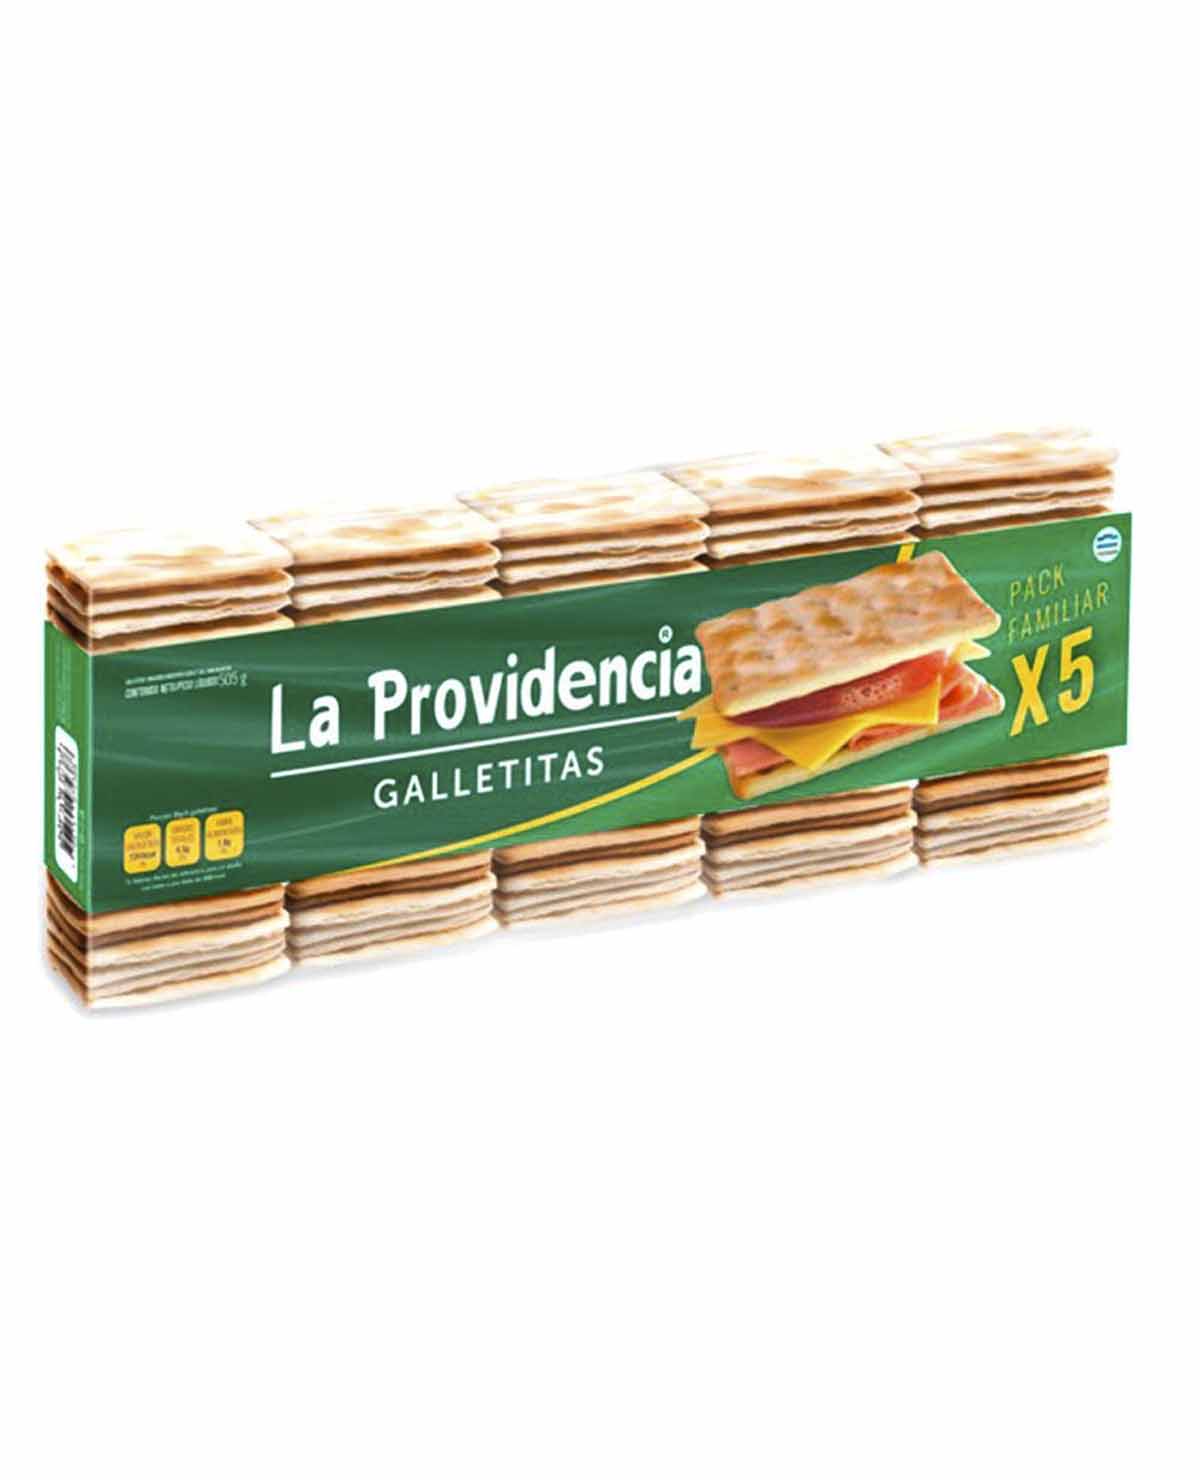 Galletas La Providencia Crackers Pack Familiar (5) x 505 Gr